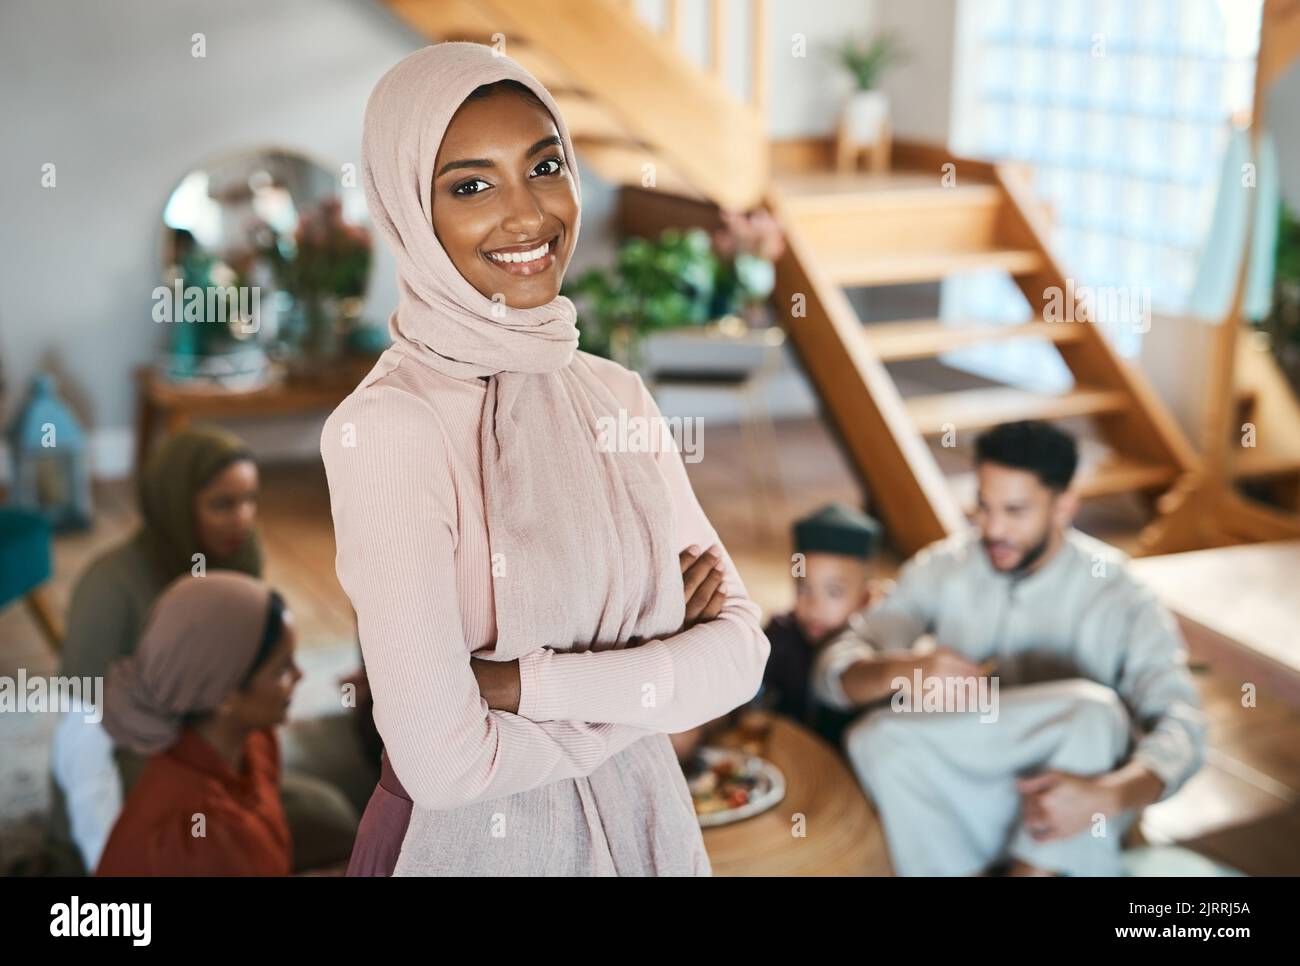 Muslim islam woman on EID with family at house in .Pakistan, Saudi Arabia or Iran to celebrate ramadan. Young girl smile in hijab with food in Stock Photo